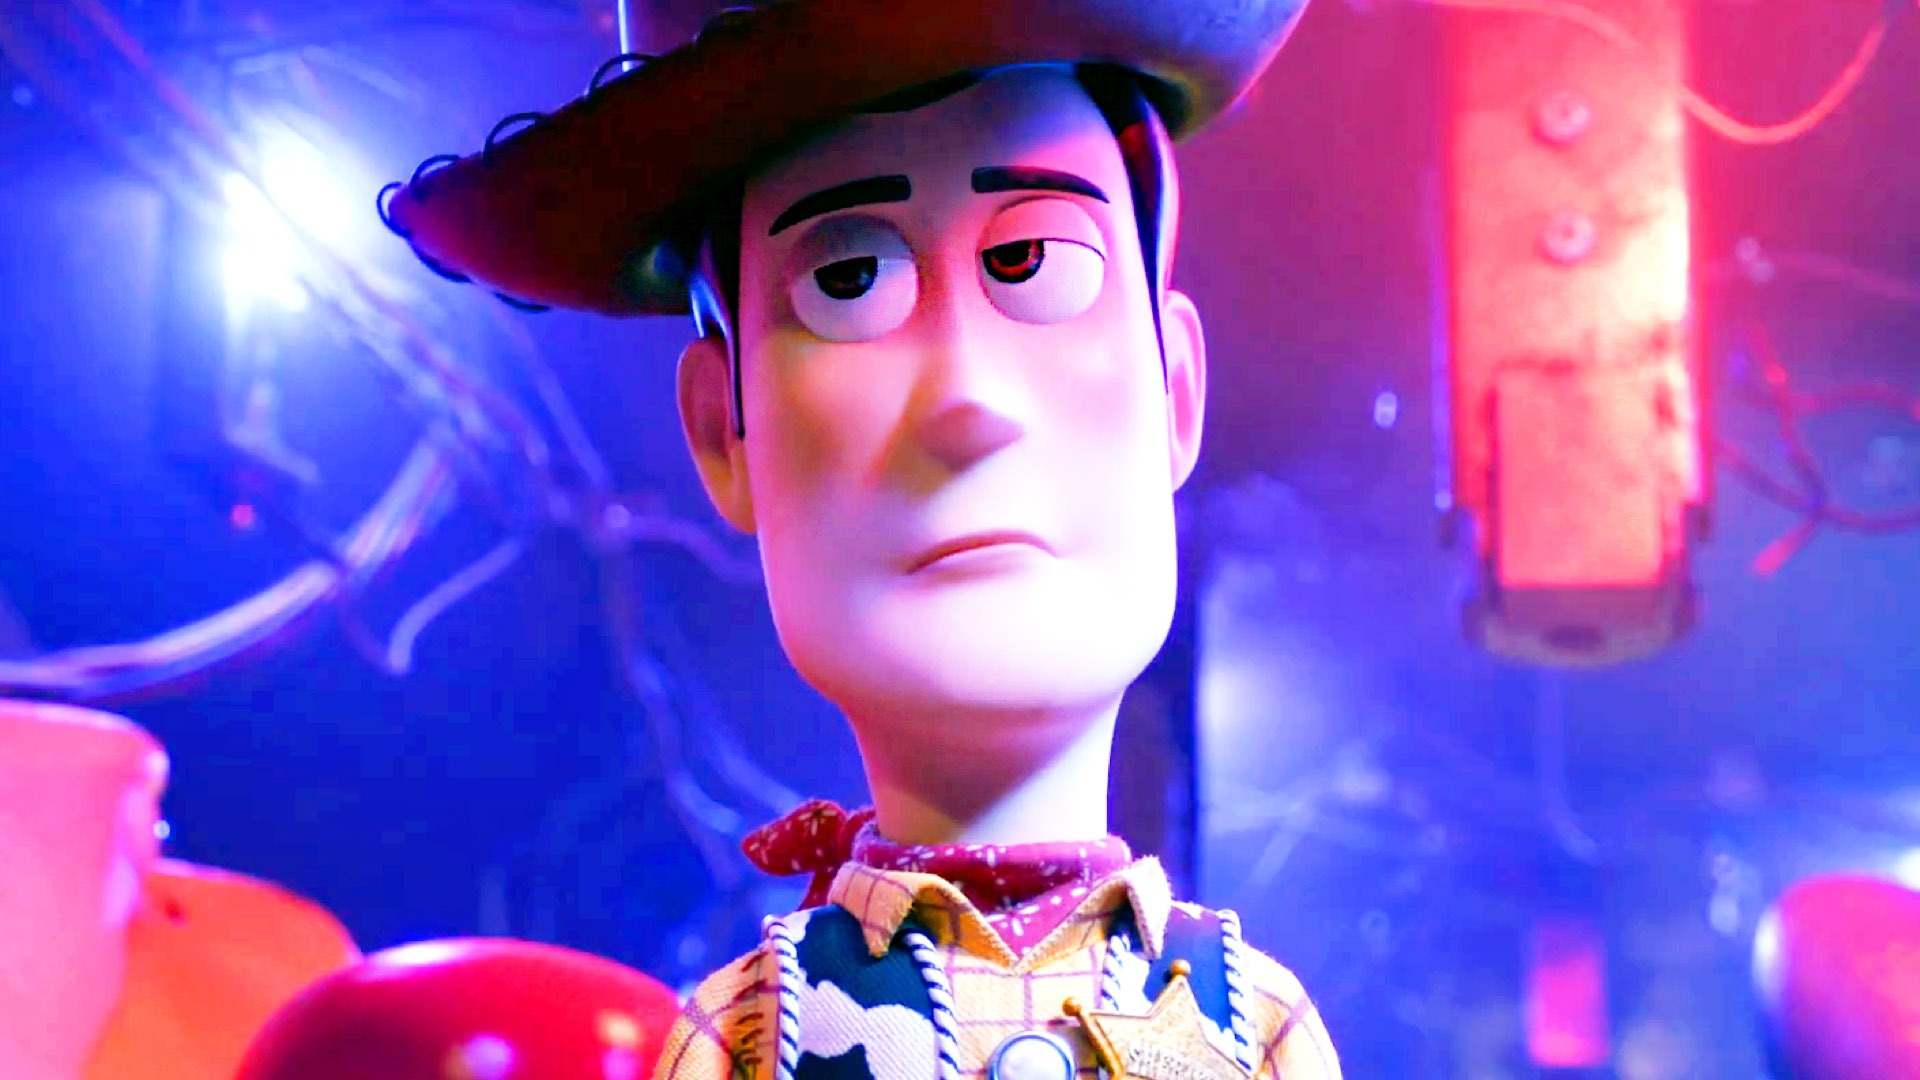 Toy Story 4 - Metacritic